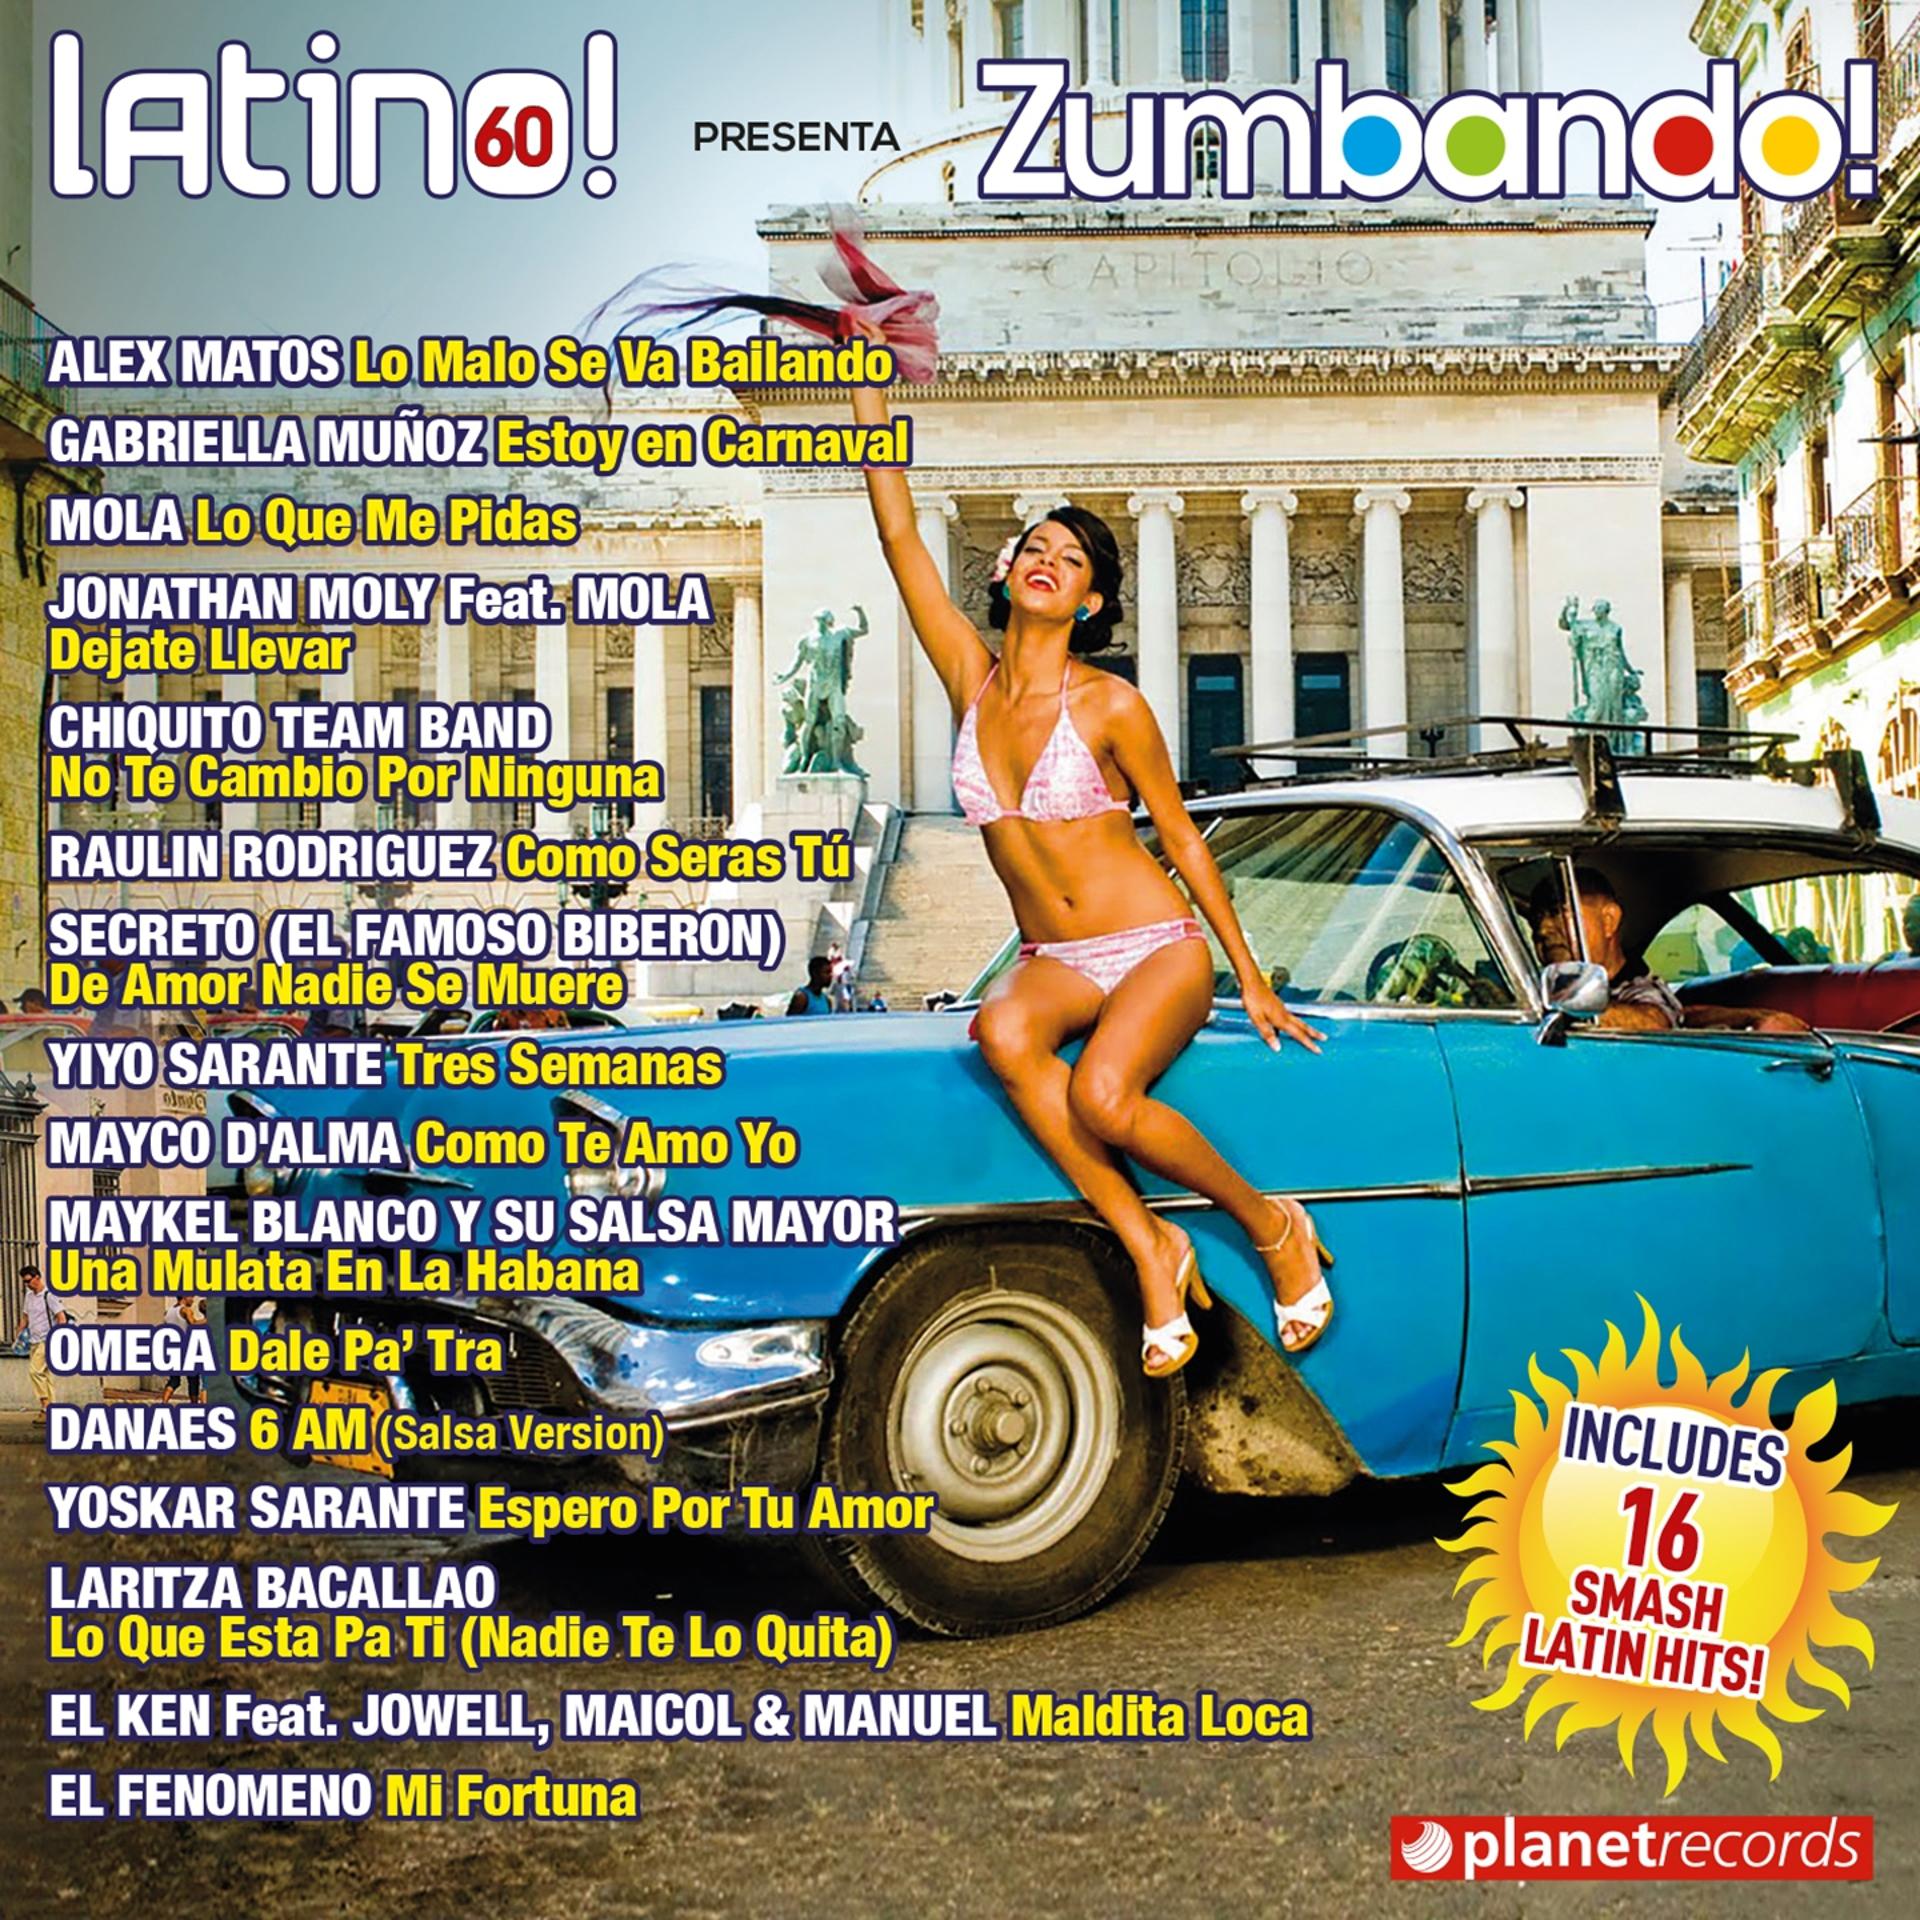 Постер альбома Latino 60 presenta Zumbando (World Edition)